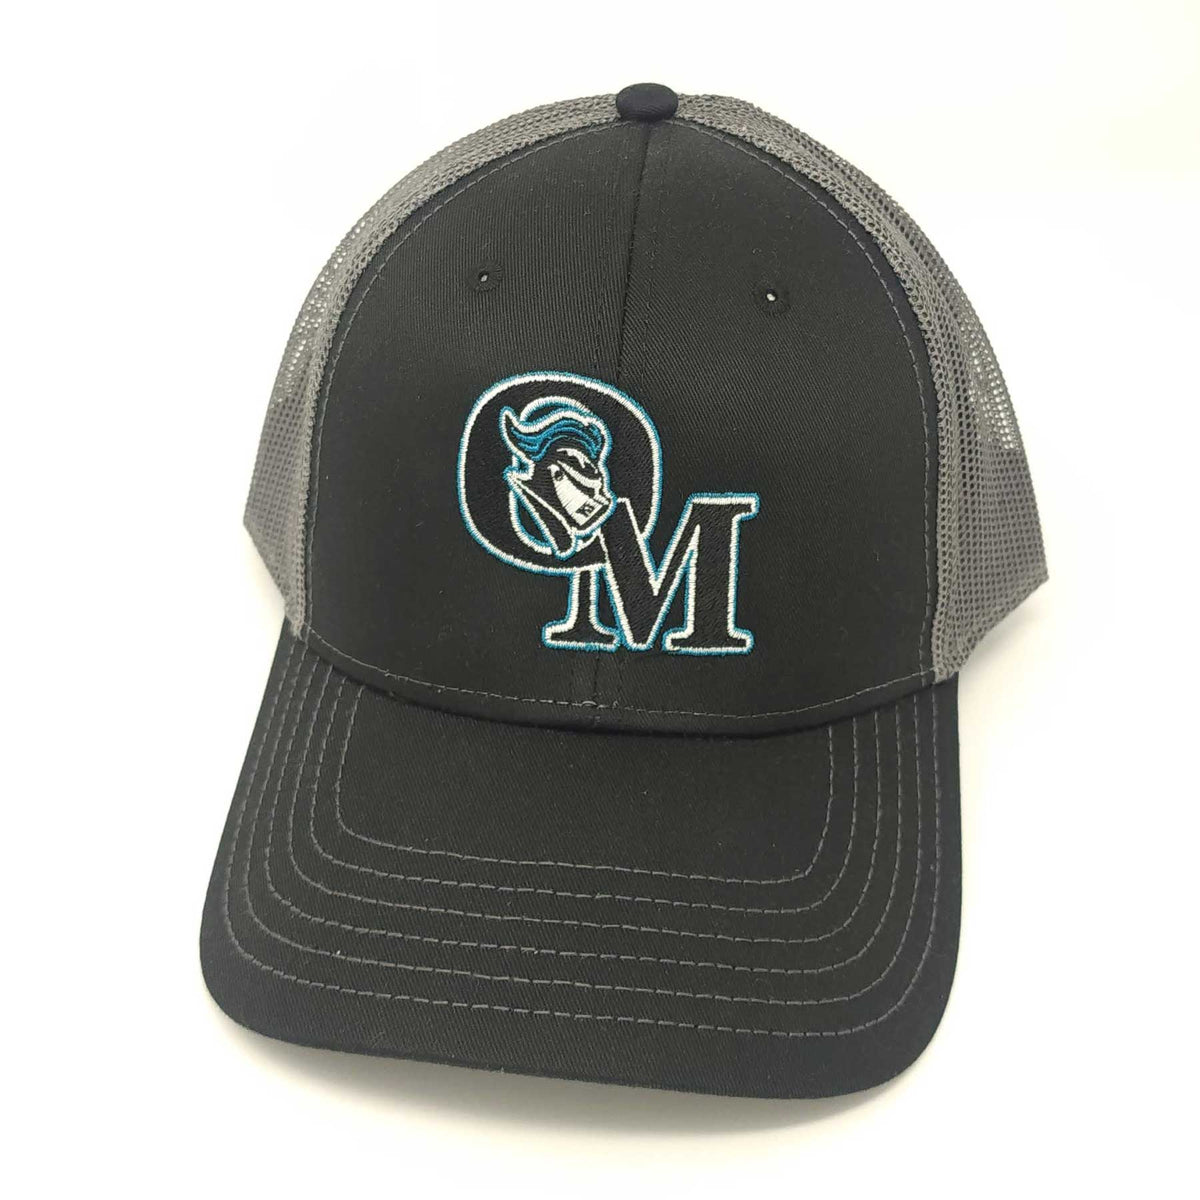 Organ Mountain High School Black and Grey Trucker Cap with Teal Logo